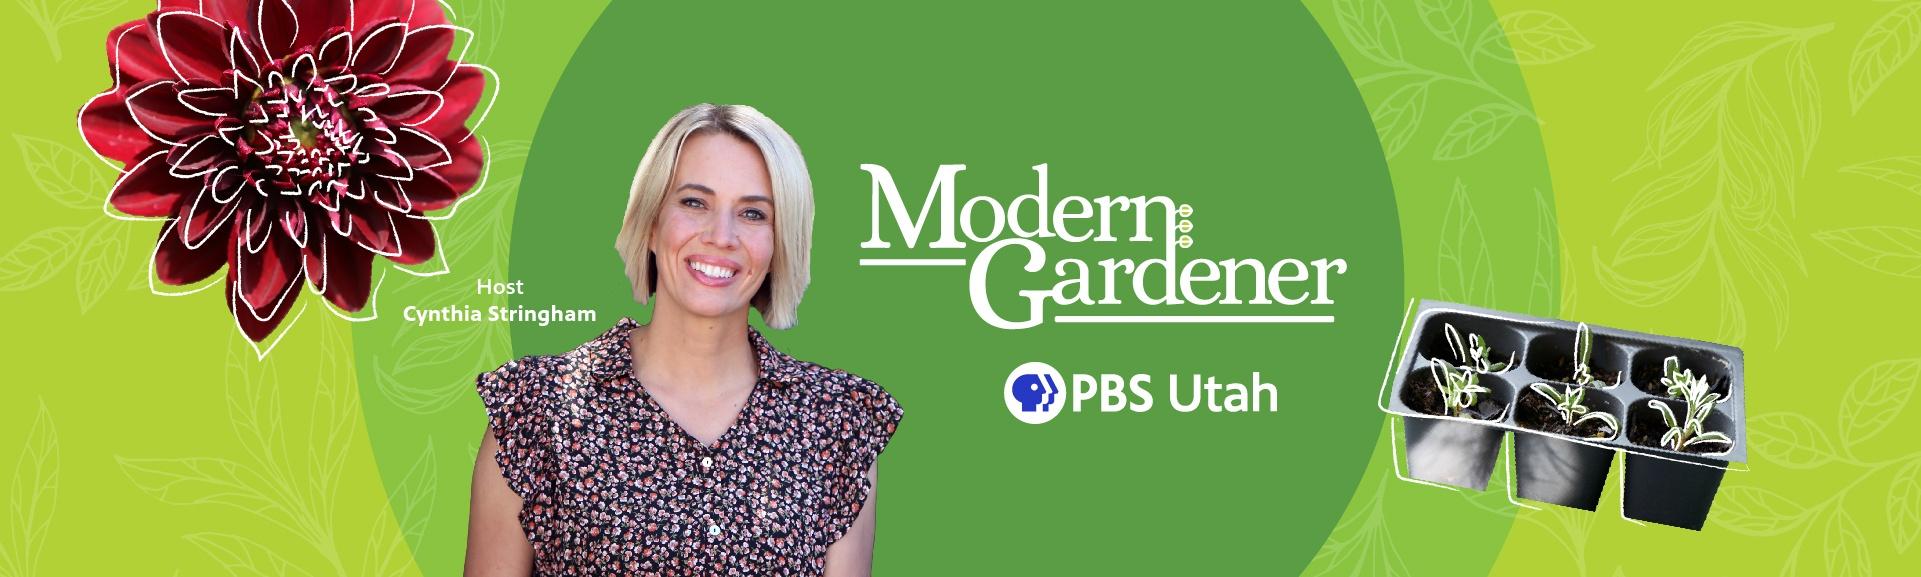 Modern Gardener Host is Cynthia Stringham